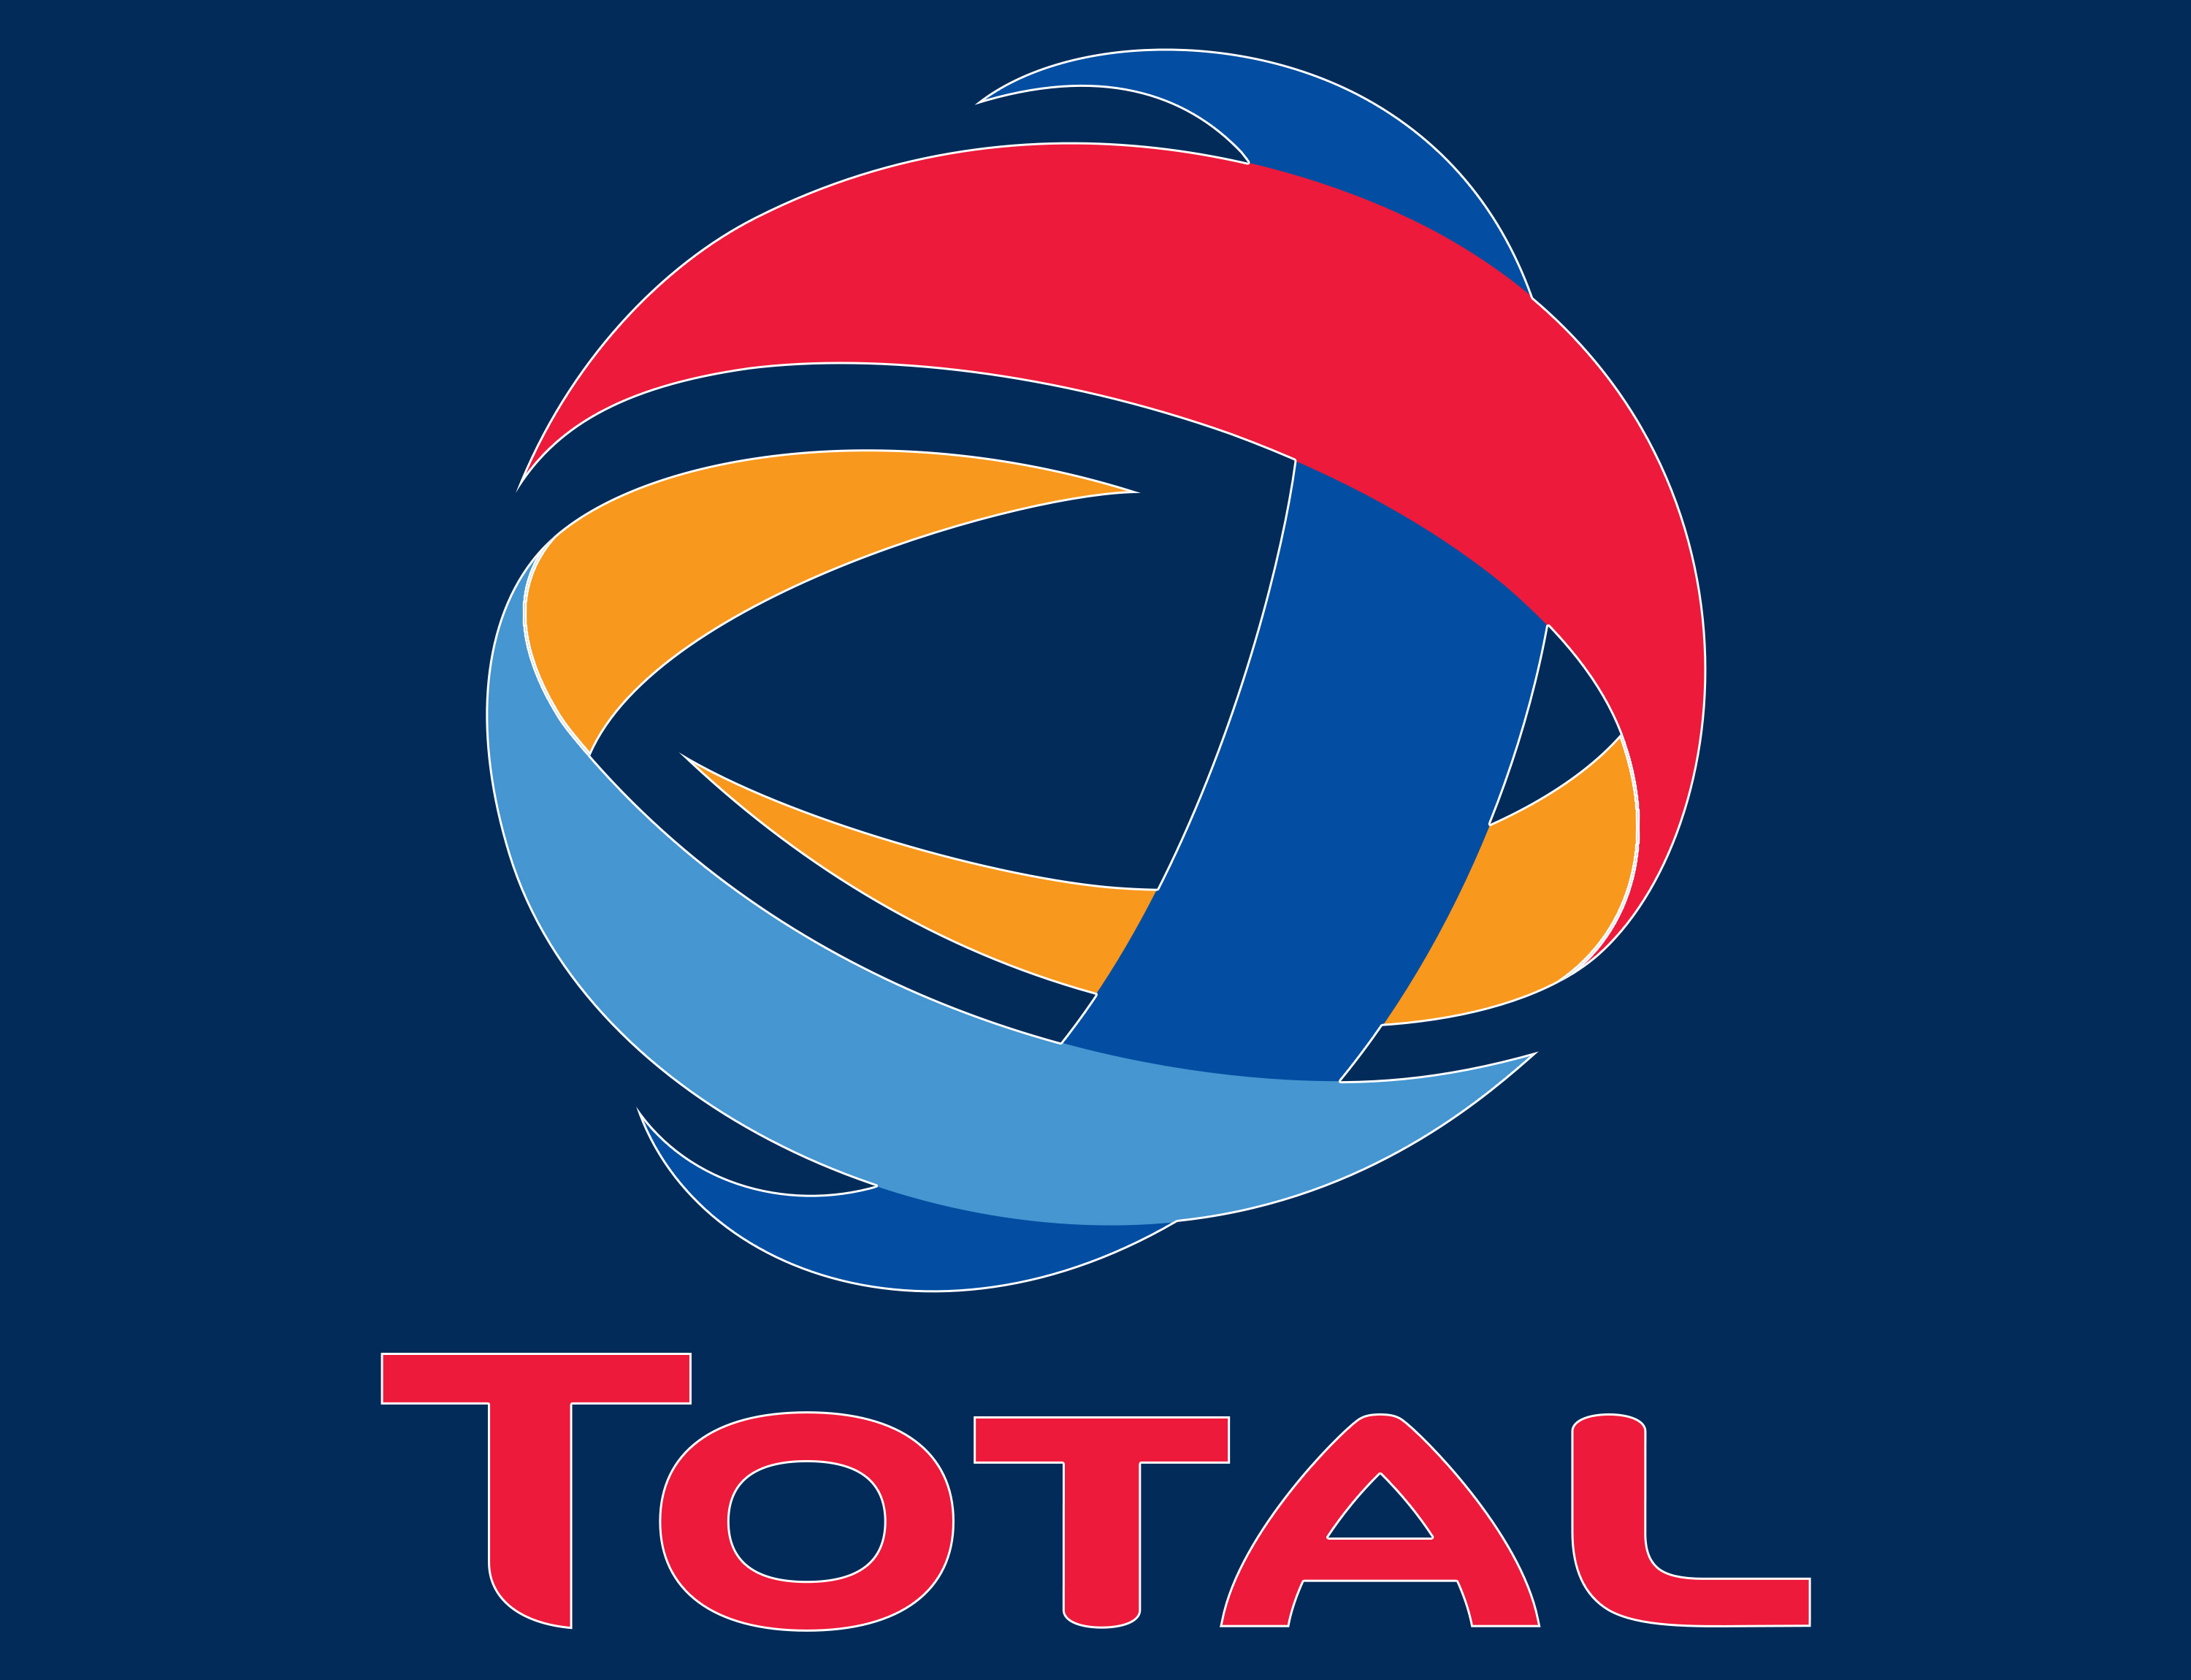 Total company. Тотал логотип. Total масло лого. Логотип Тоталь. Totta.